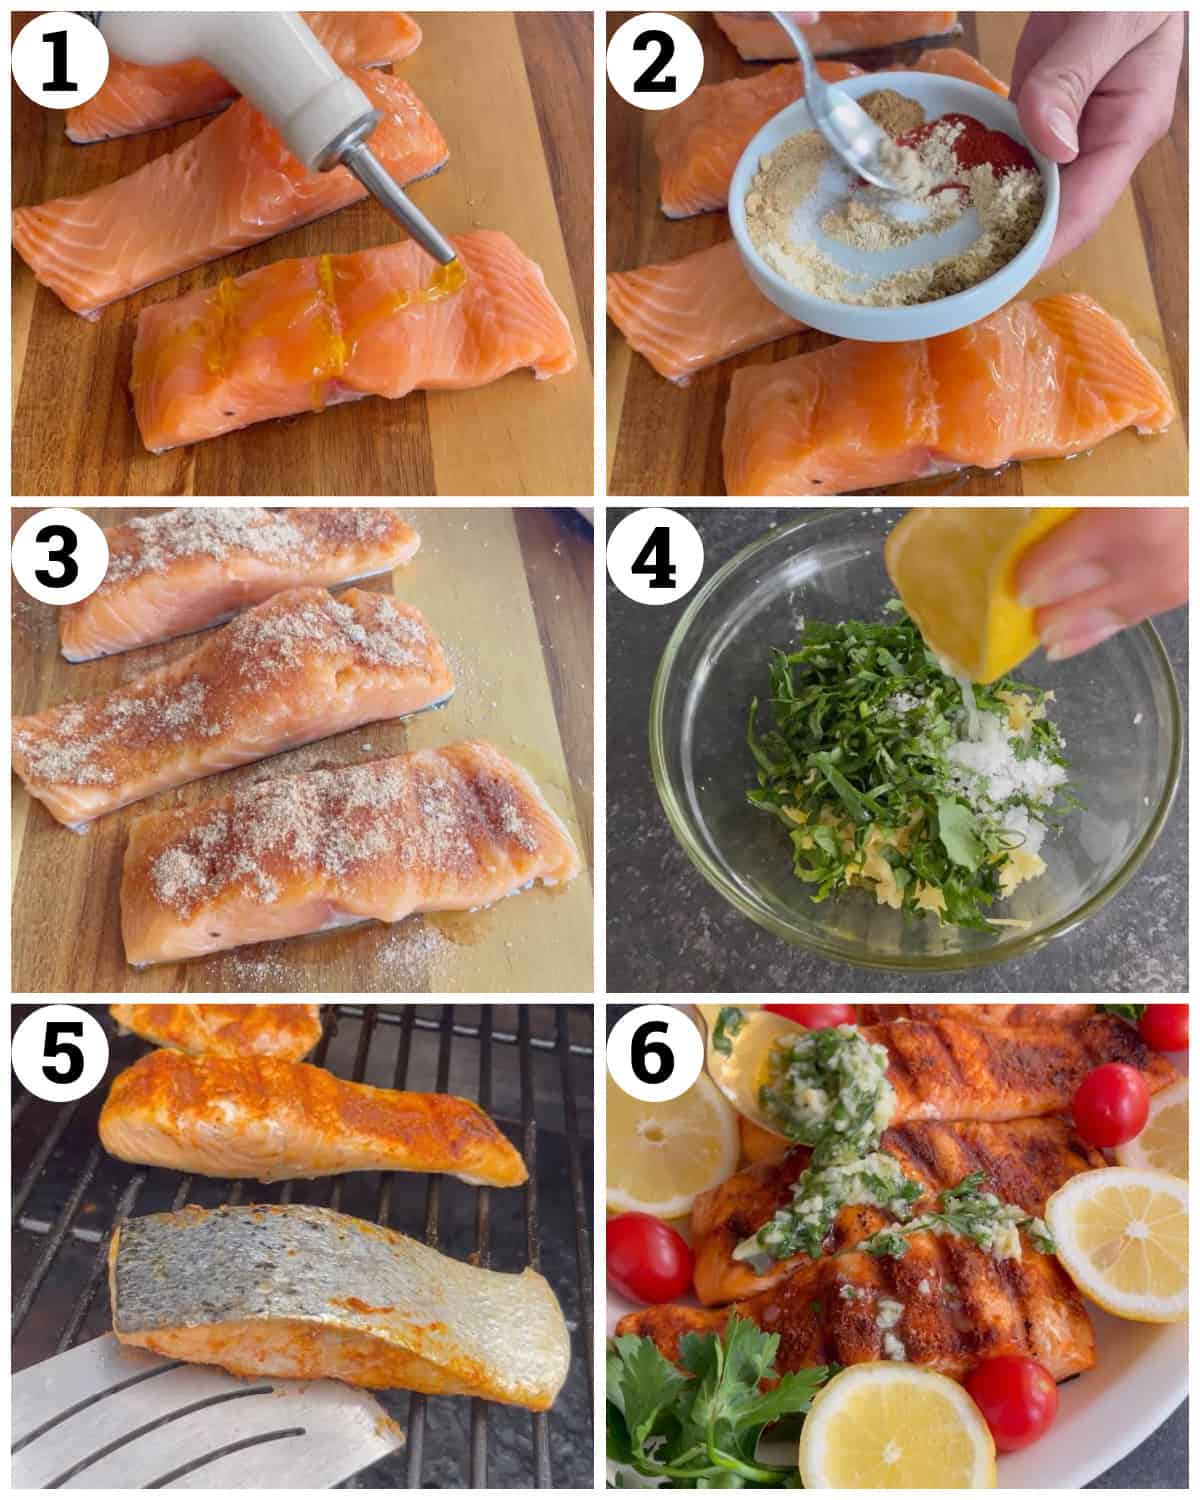 Season the salmon and make the lemon garlic sauce. Grill the salmon and top with the sauce. 